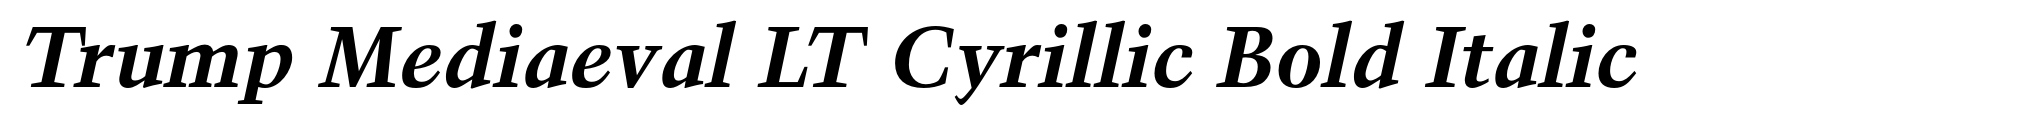 Trump Mediaeval LT Cyrillic Bold Italic image